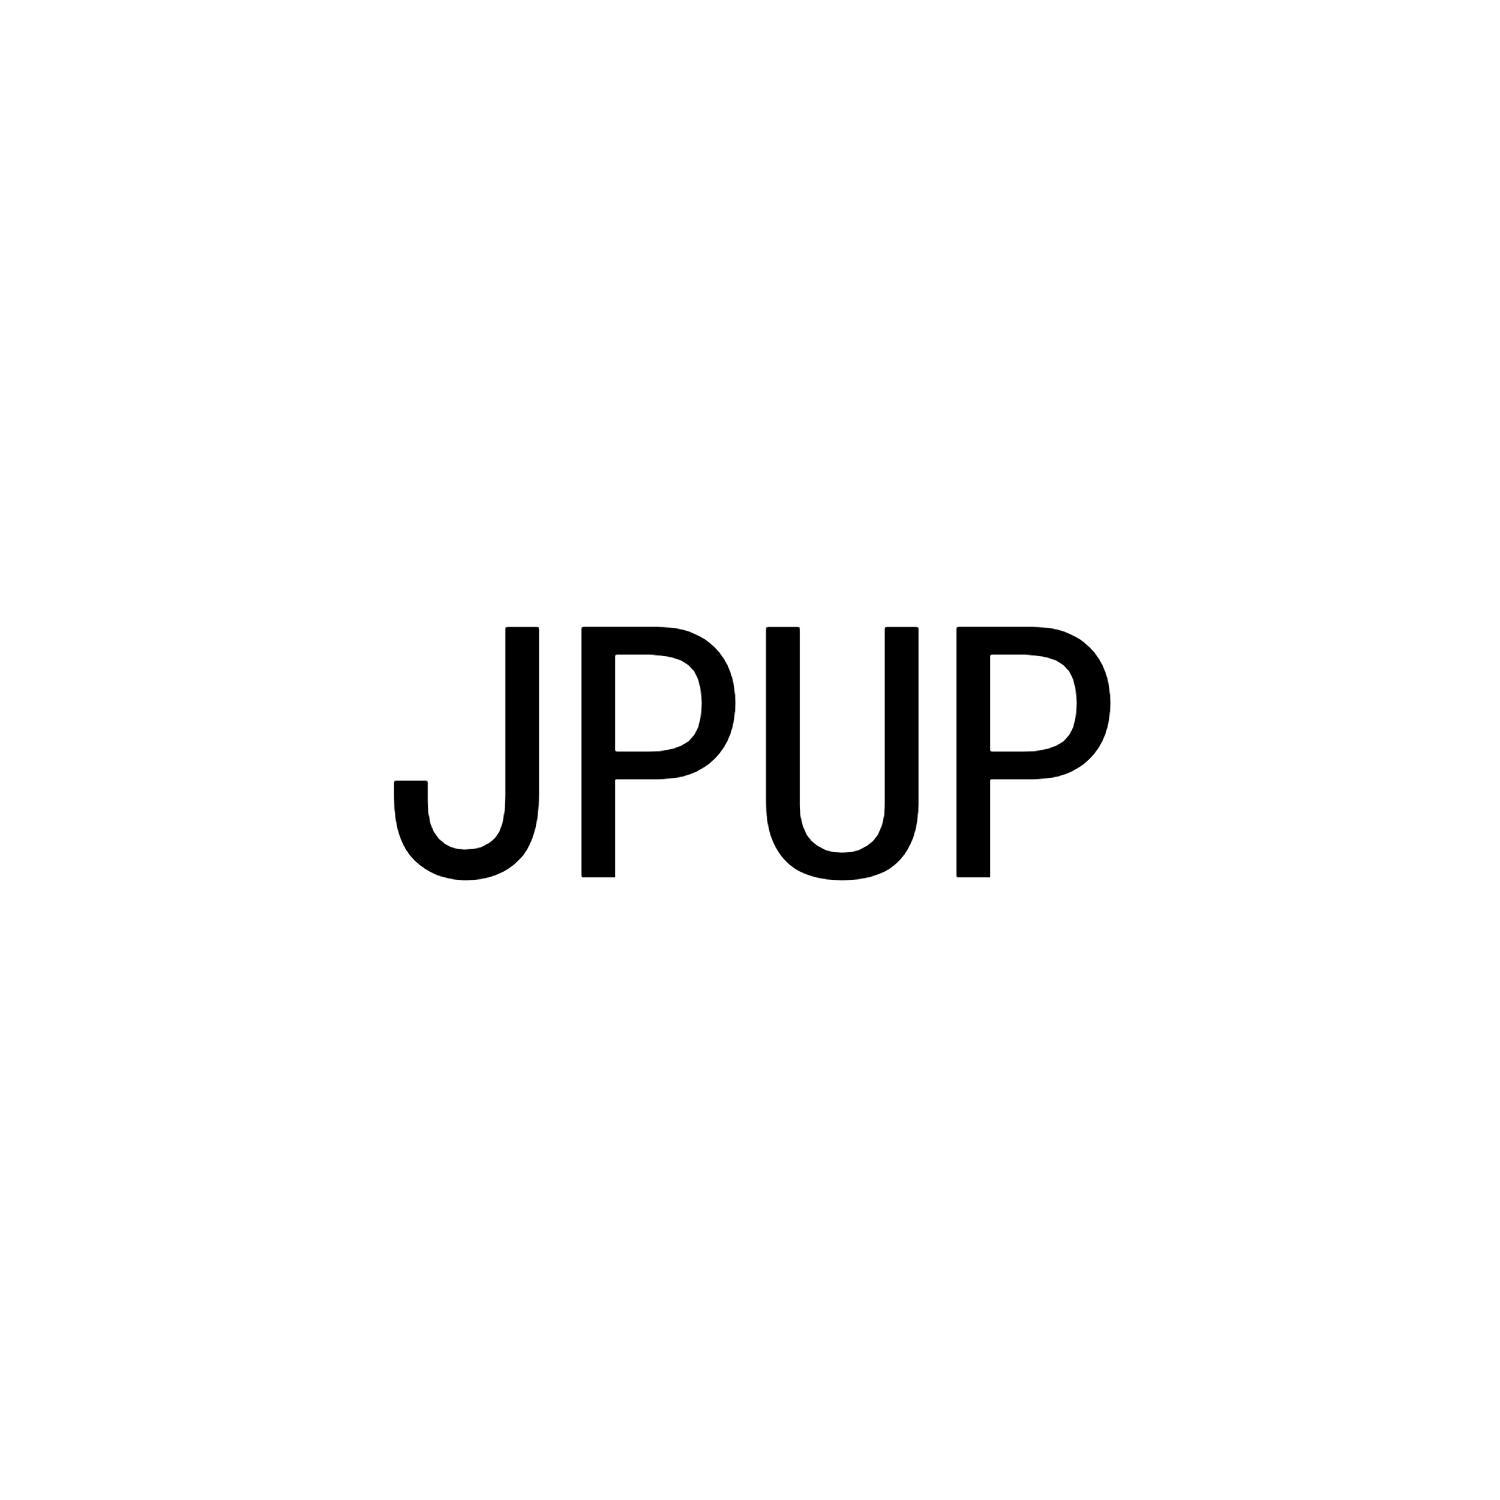 JPUP